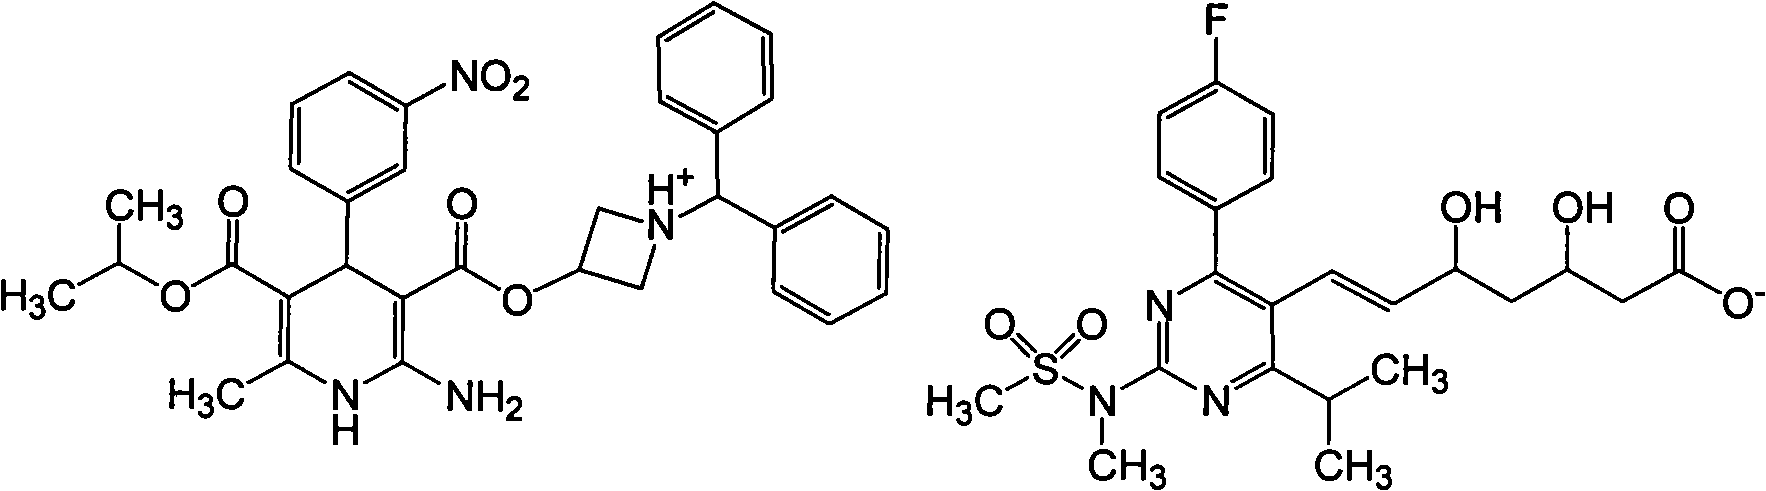 Rosuvastatin azelnidipine composition